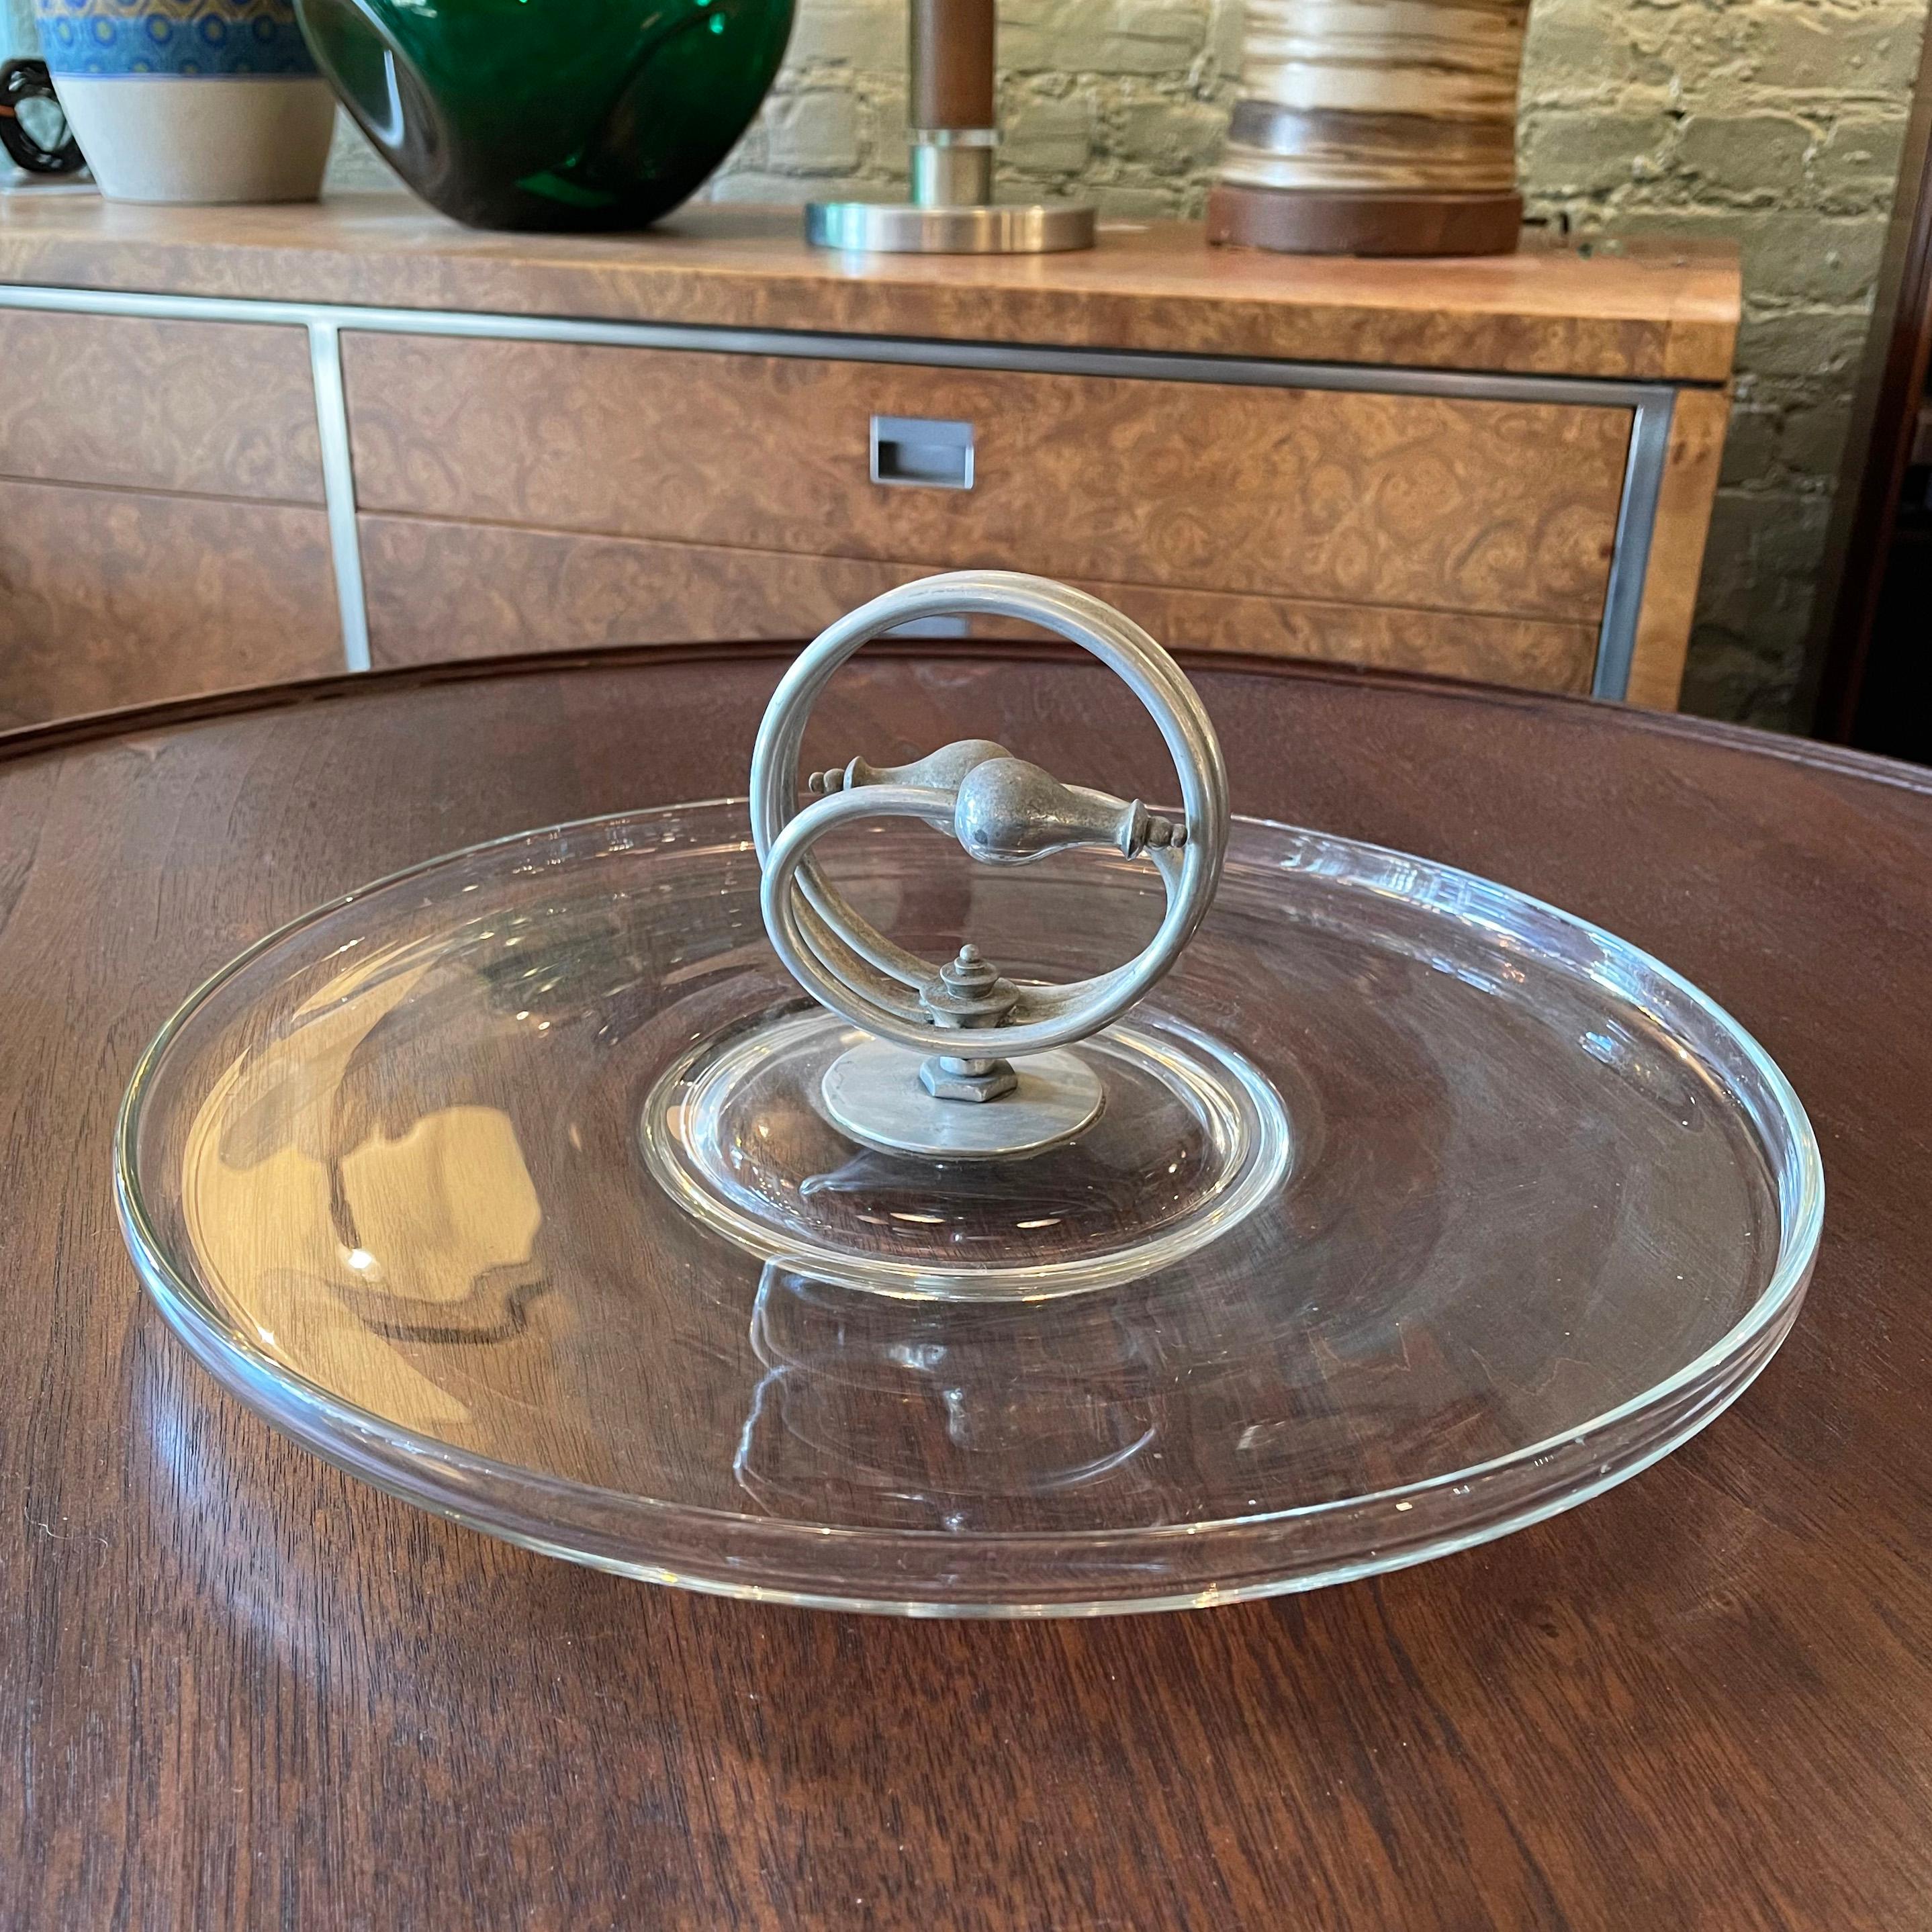 Art Deco, glass serving platter dish features a decorative, colied aluminum handle.